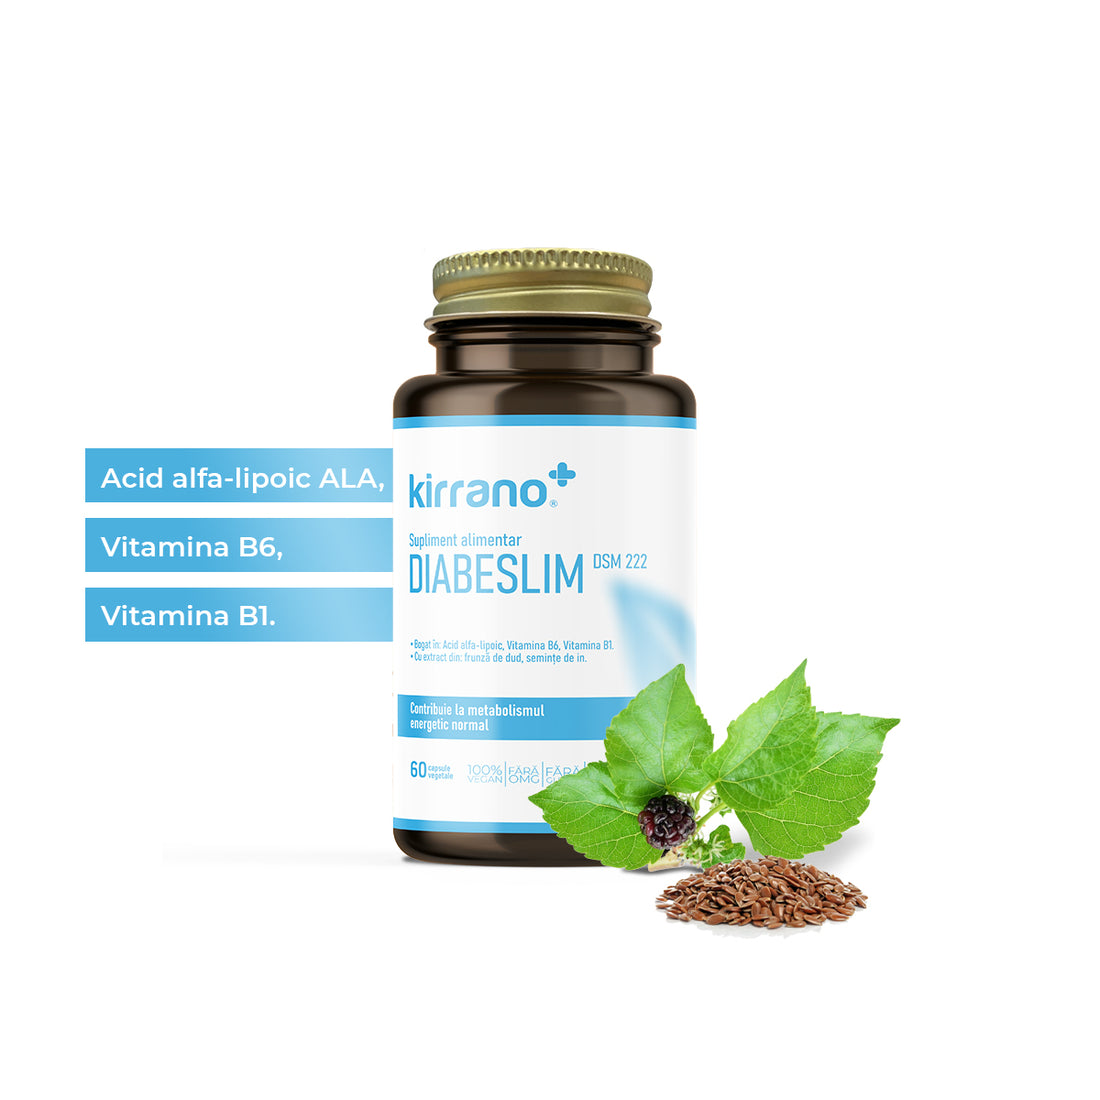 Supliment alimentar: DIABESLIM DSM222 antioxidant pentru energie și metabolism